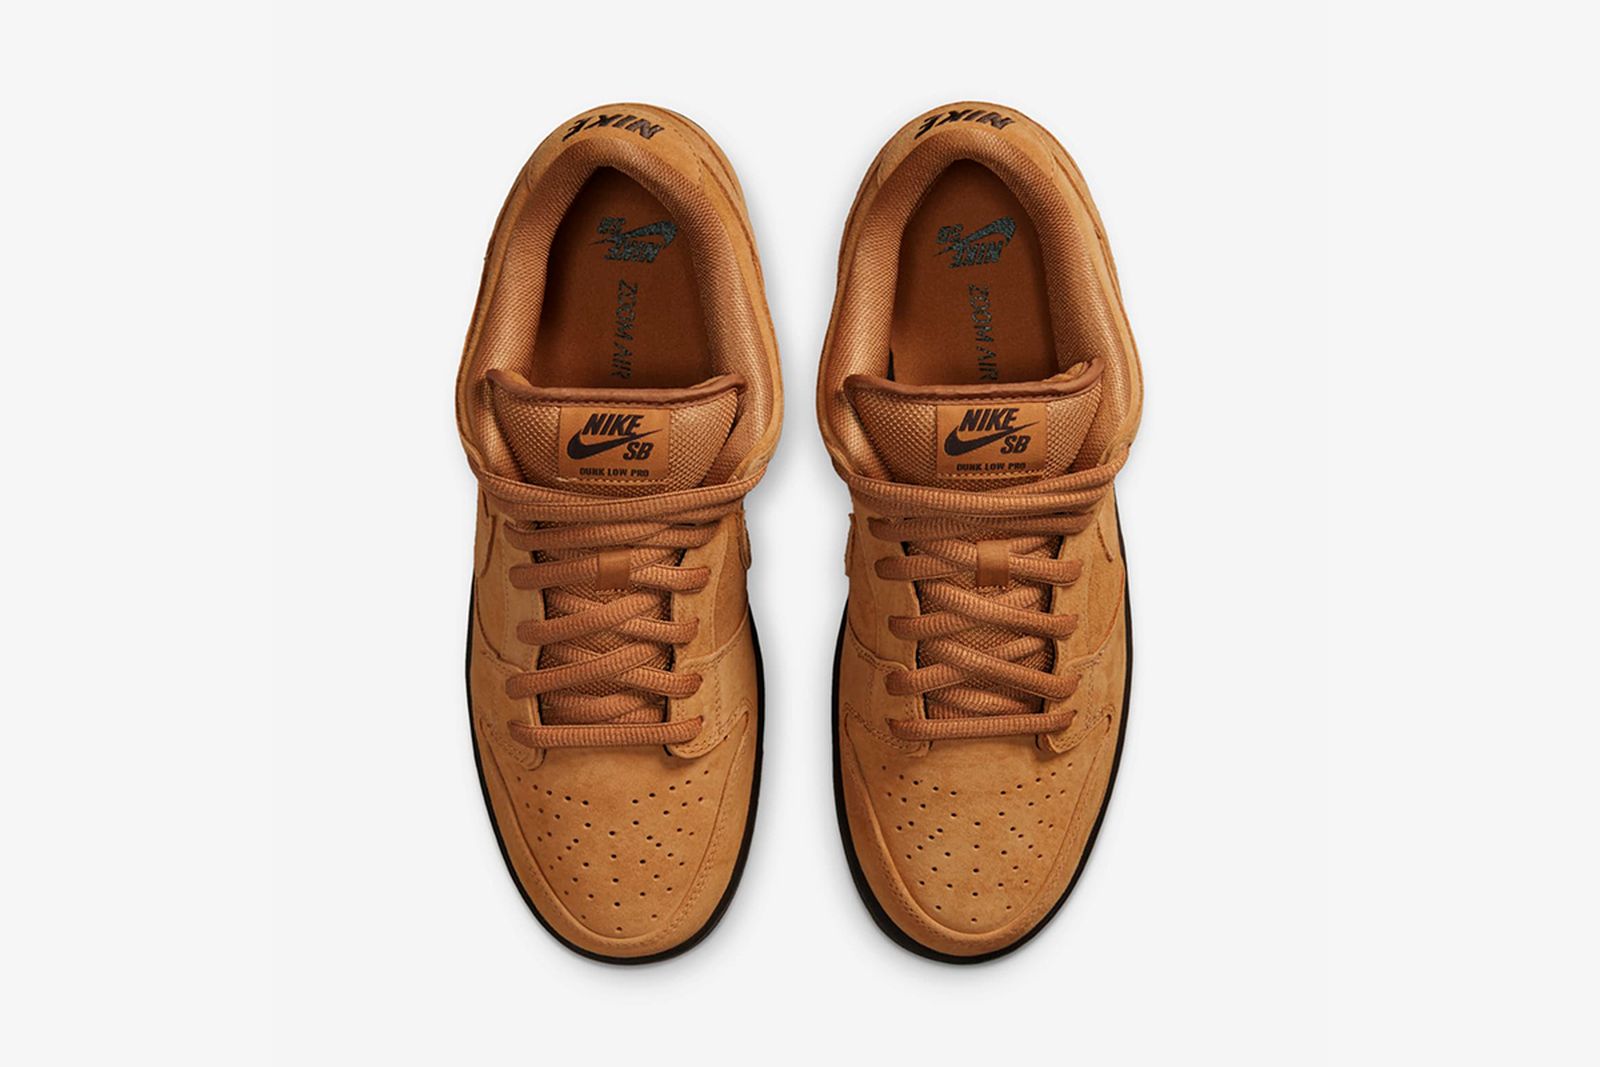 Nike SB Dunk Low Pro “Wheat”: Official Images & European Drop Info